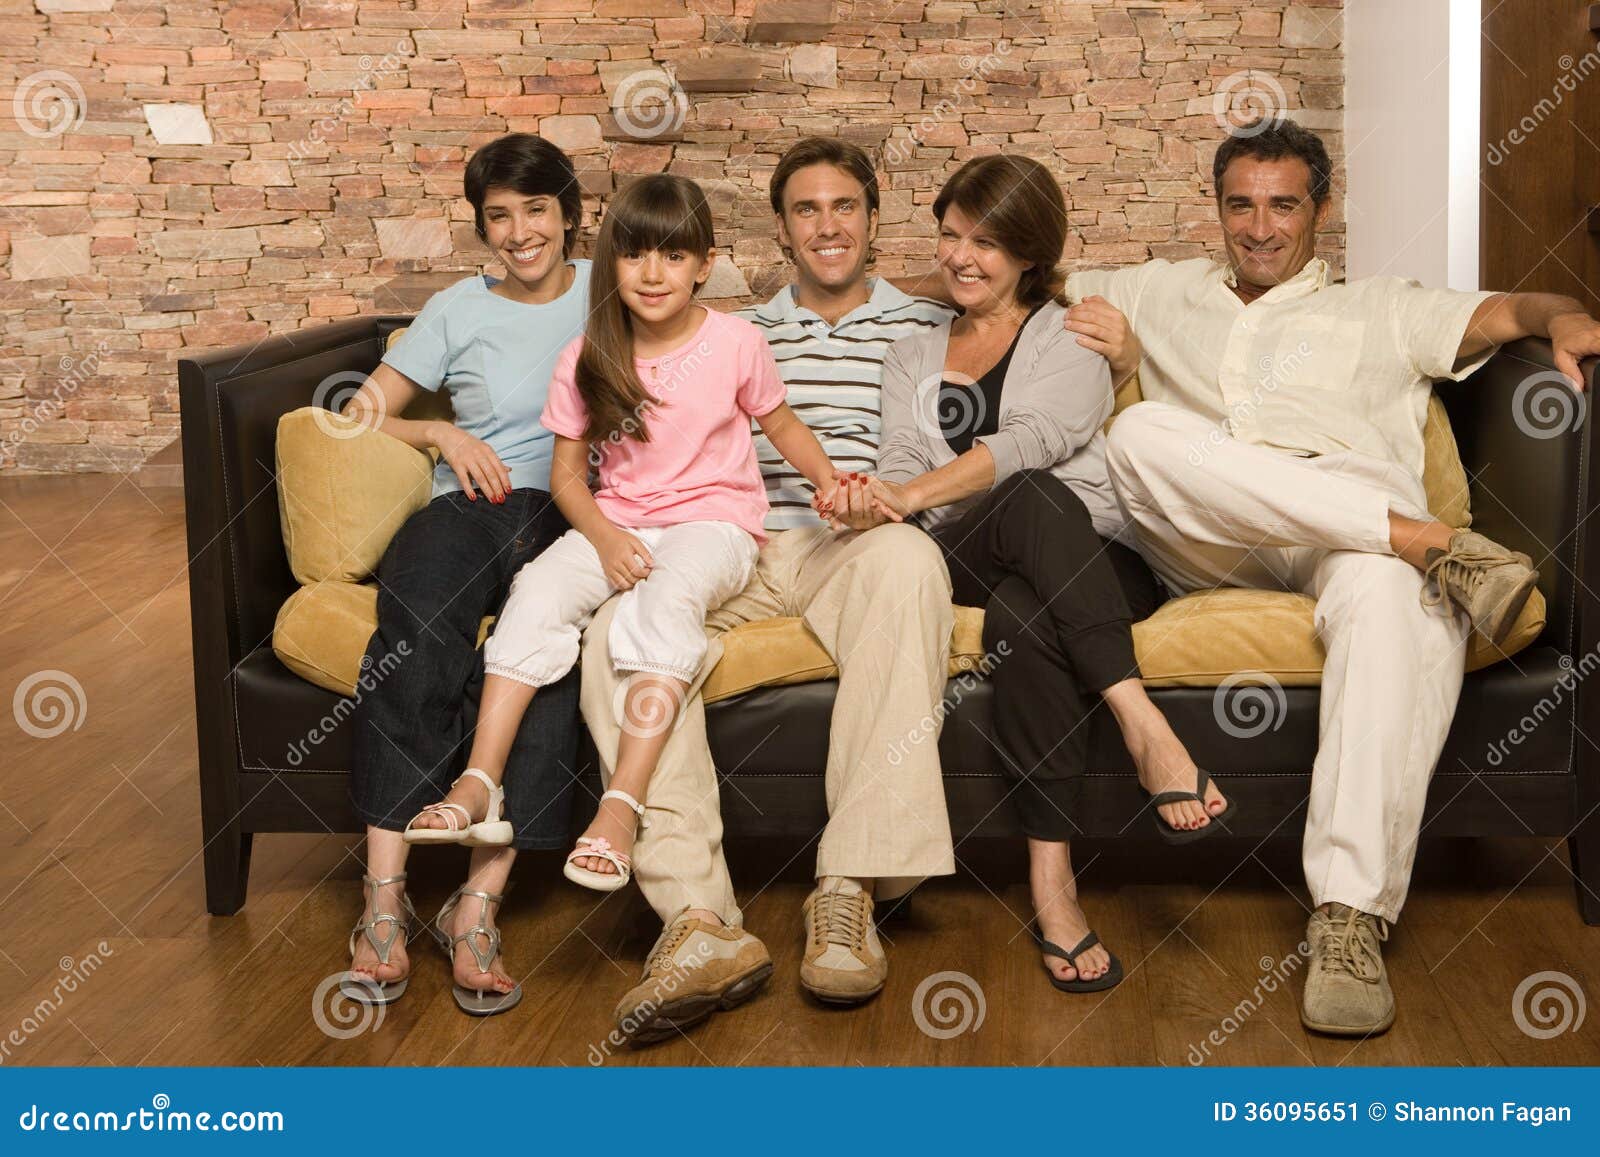 family on a sofa